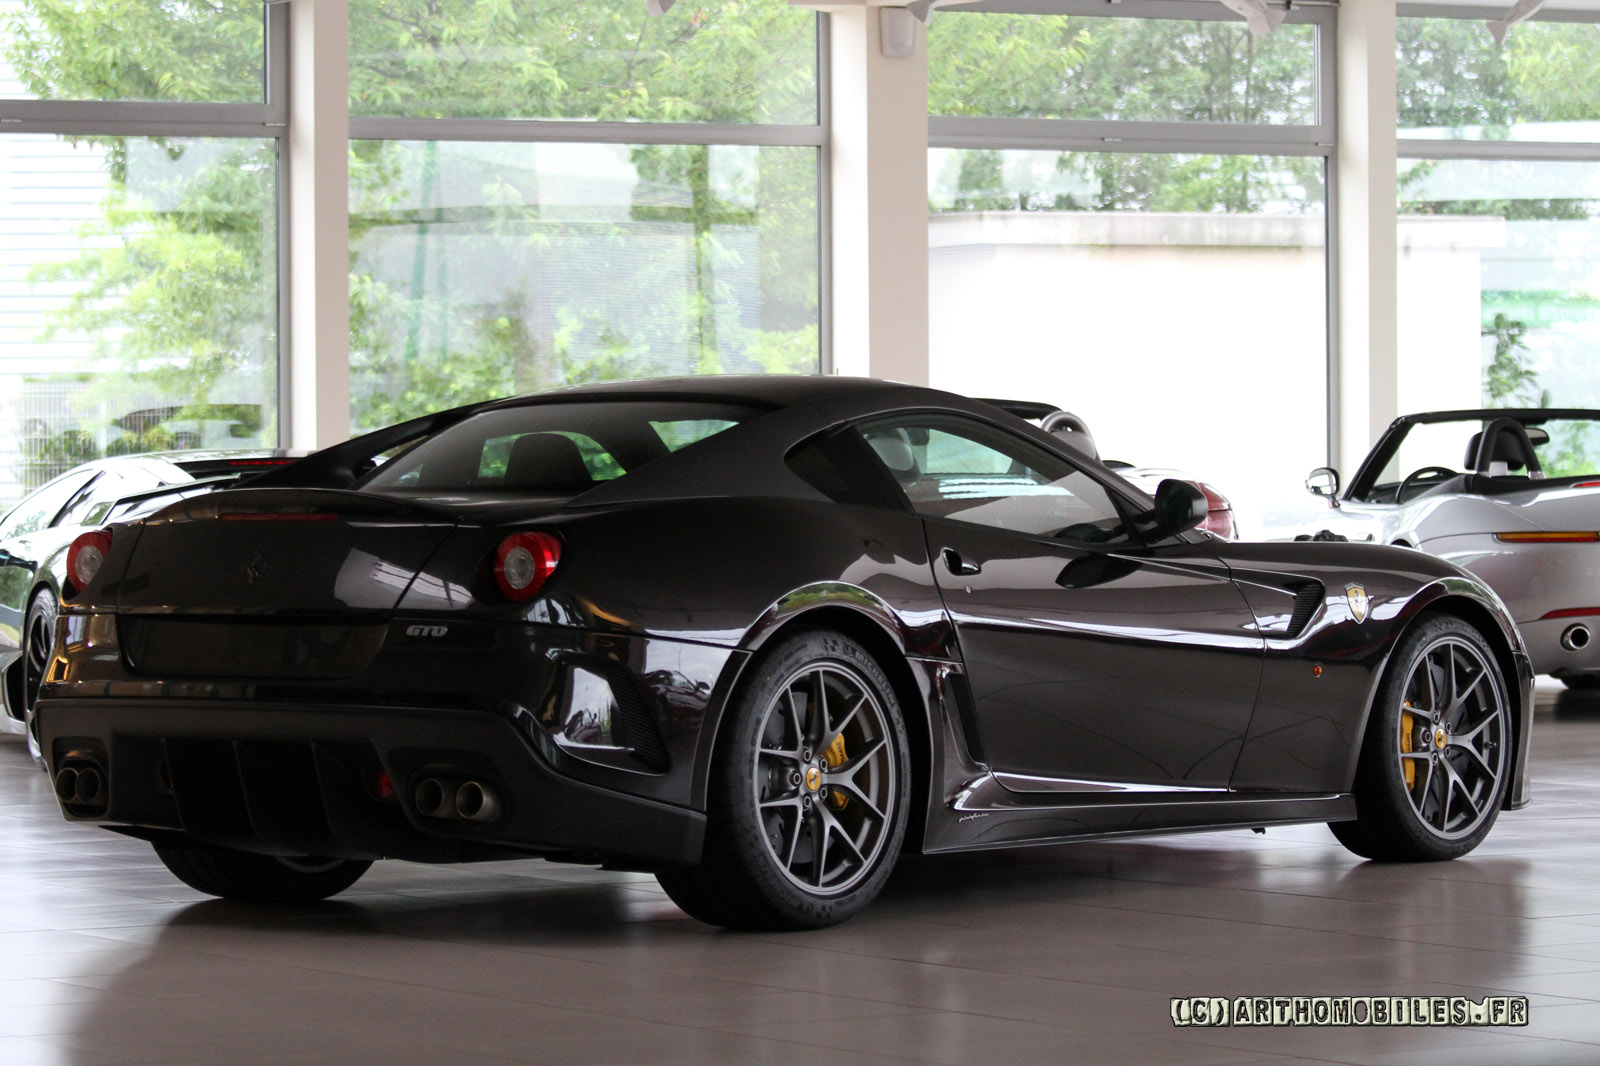 Great showroom pics of Black 599 GTO - Teamspeed.com